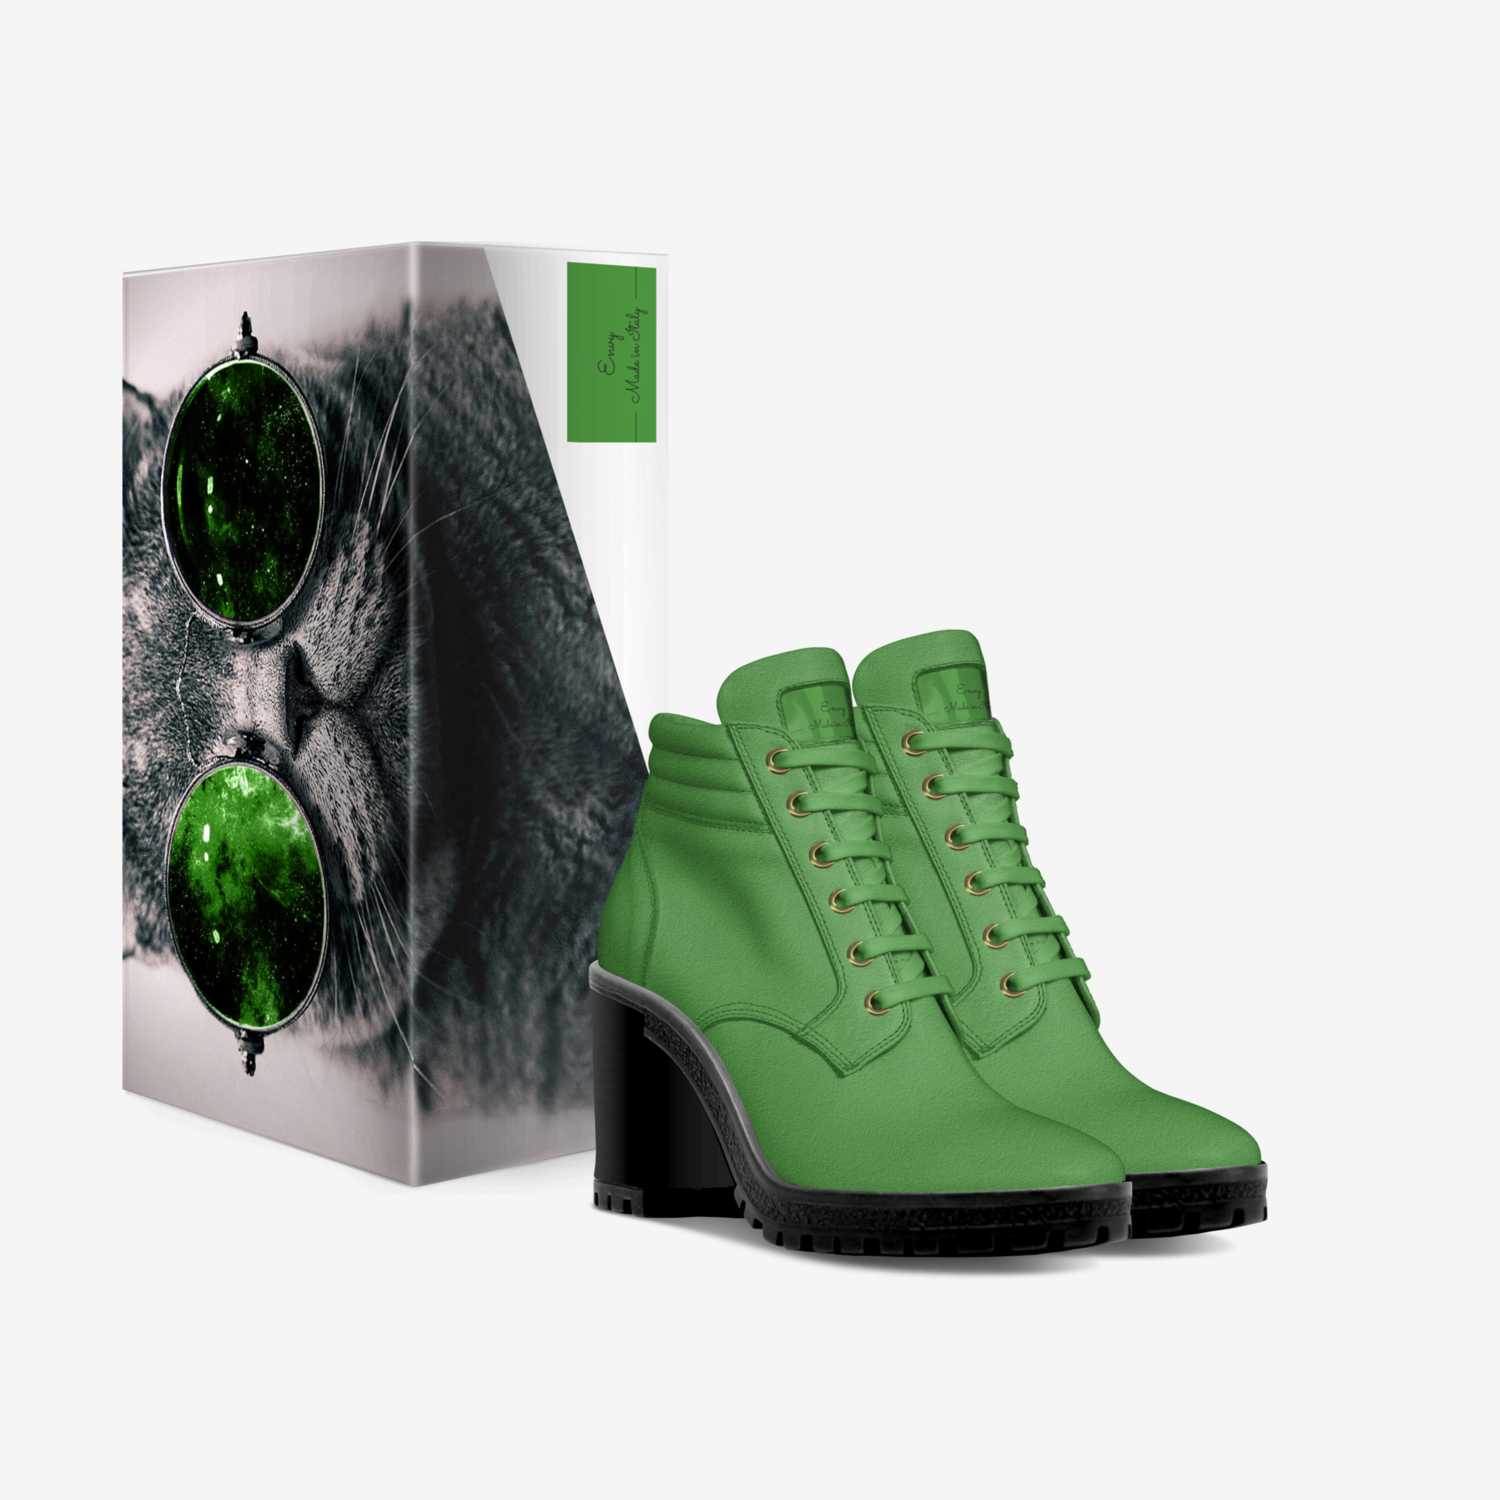 Envy custom made in Italy shoes by Aomoji Kei | Box view